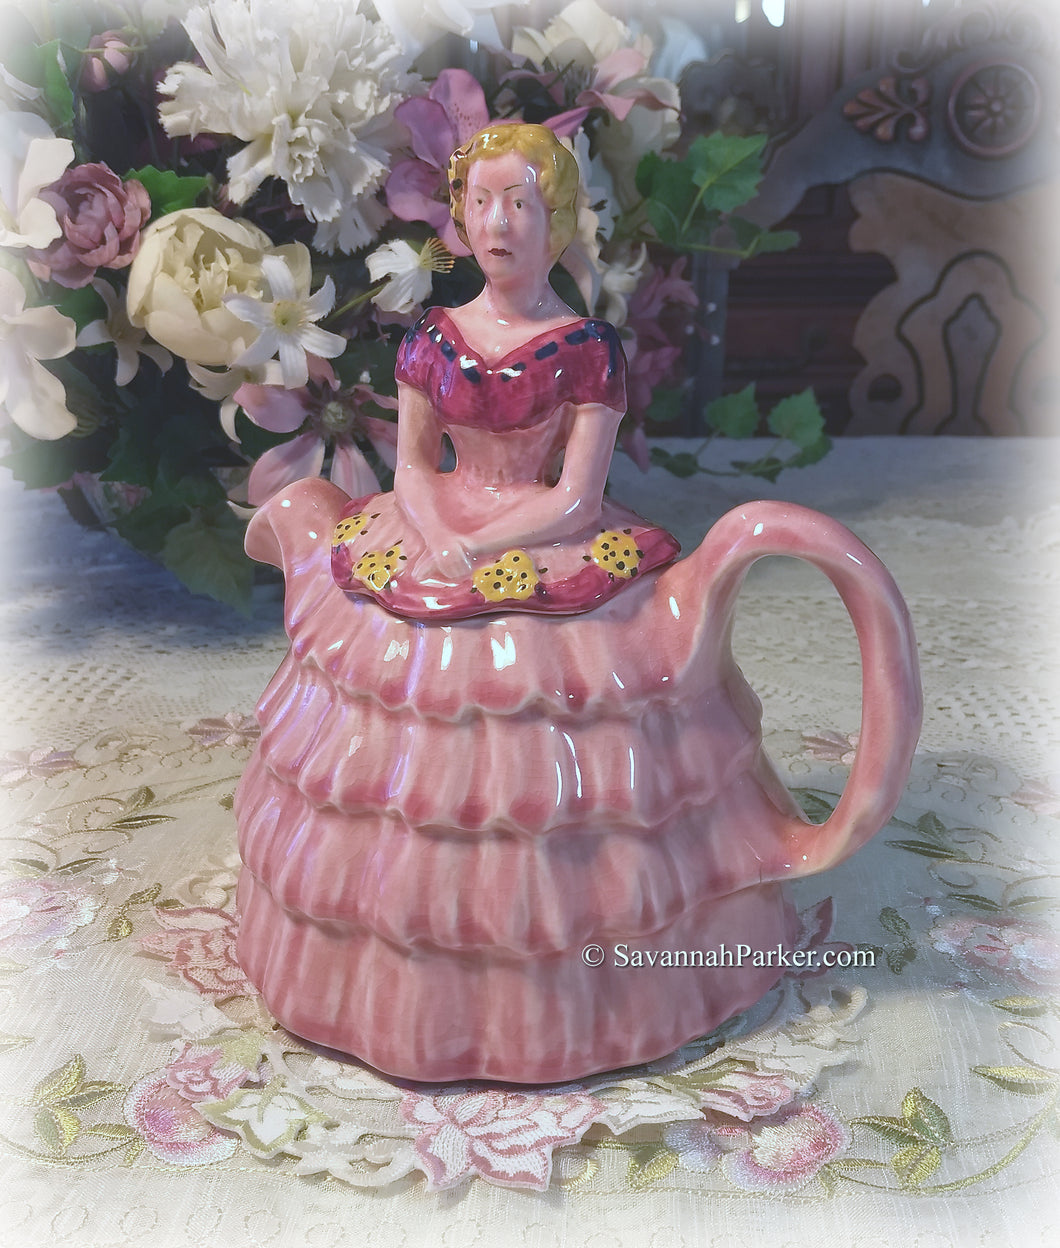 SOLD Amazing Vintage 1950's Pink Crinoline Lady Figural Teapot, H J Wood Burslem England, Rose Pink Southern Belle,Handpainted, Shabby Chic Decor